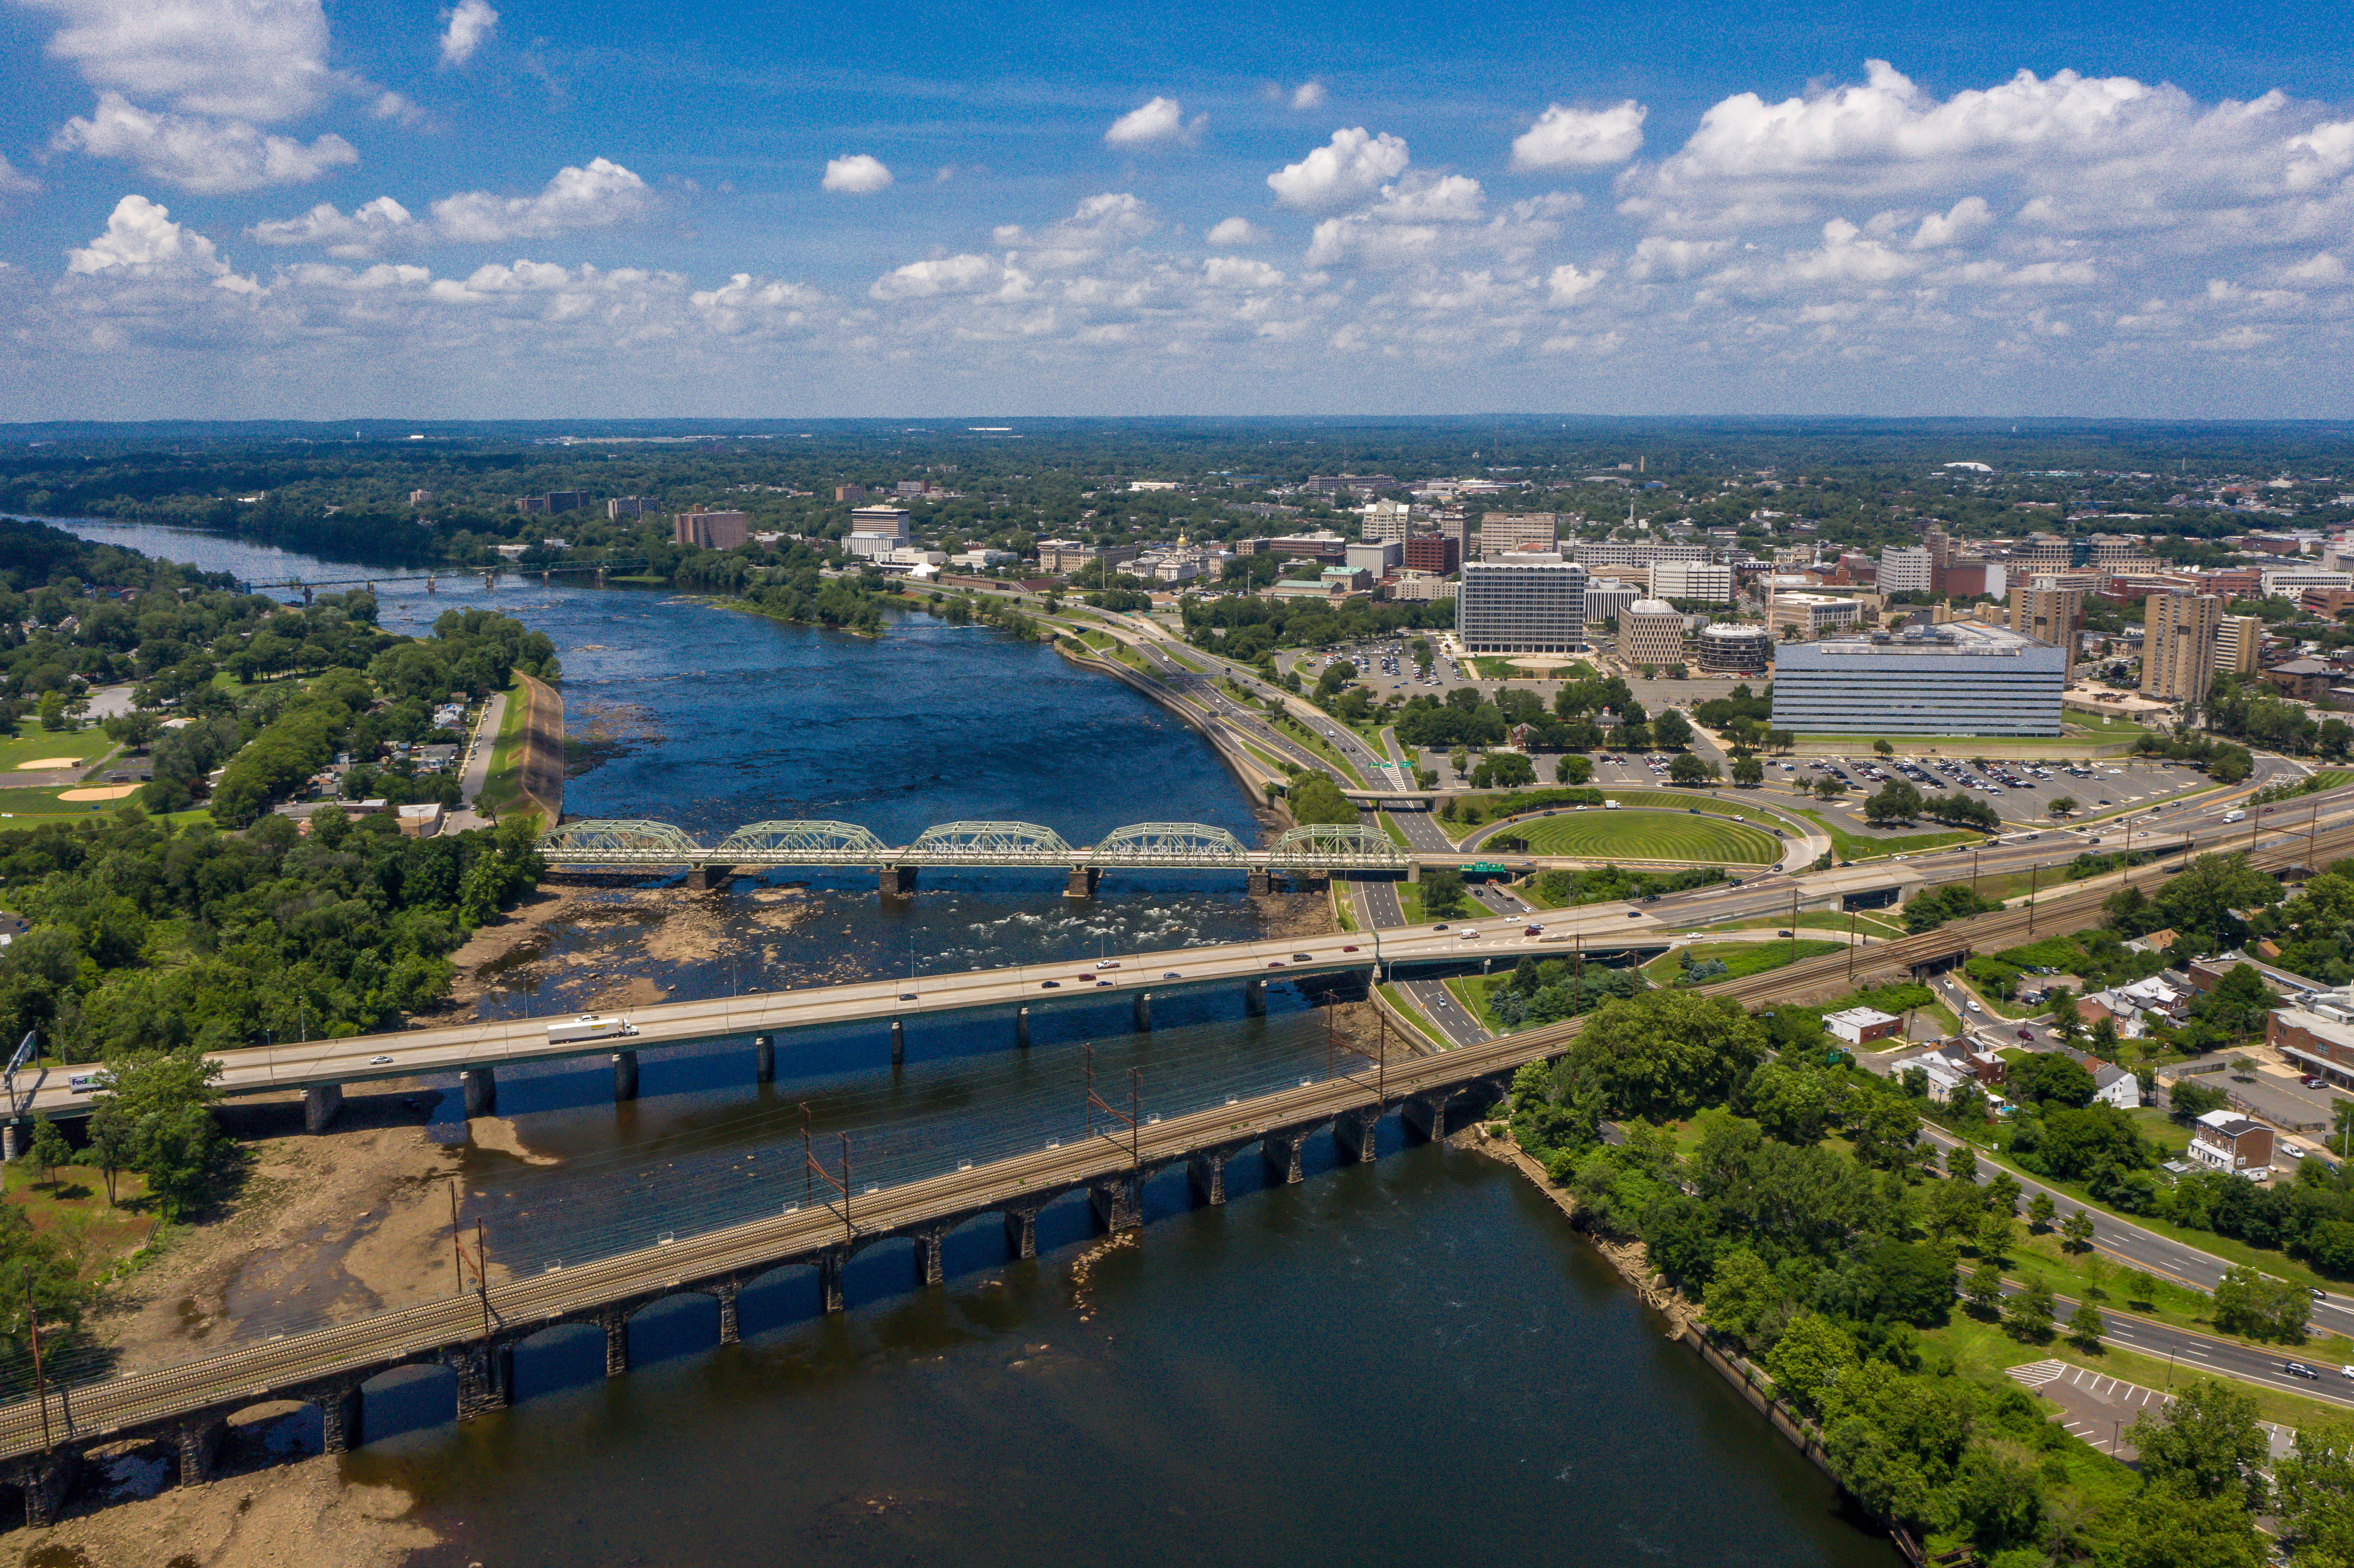 Arial view of bridges over a river near The Nolan, Morrisville, Pennsylvania